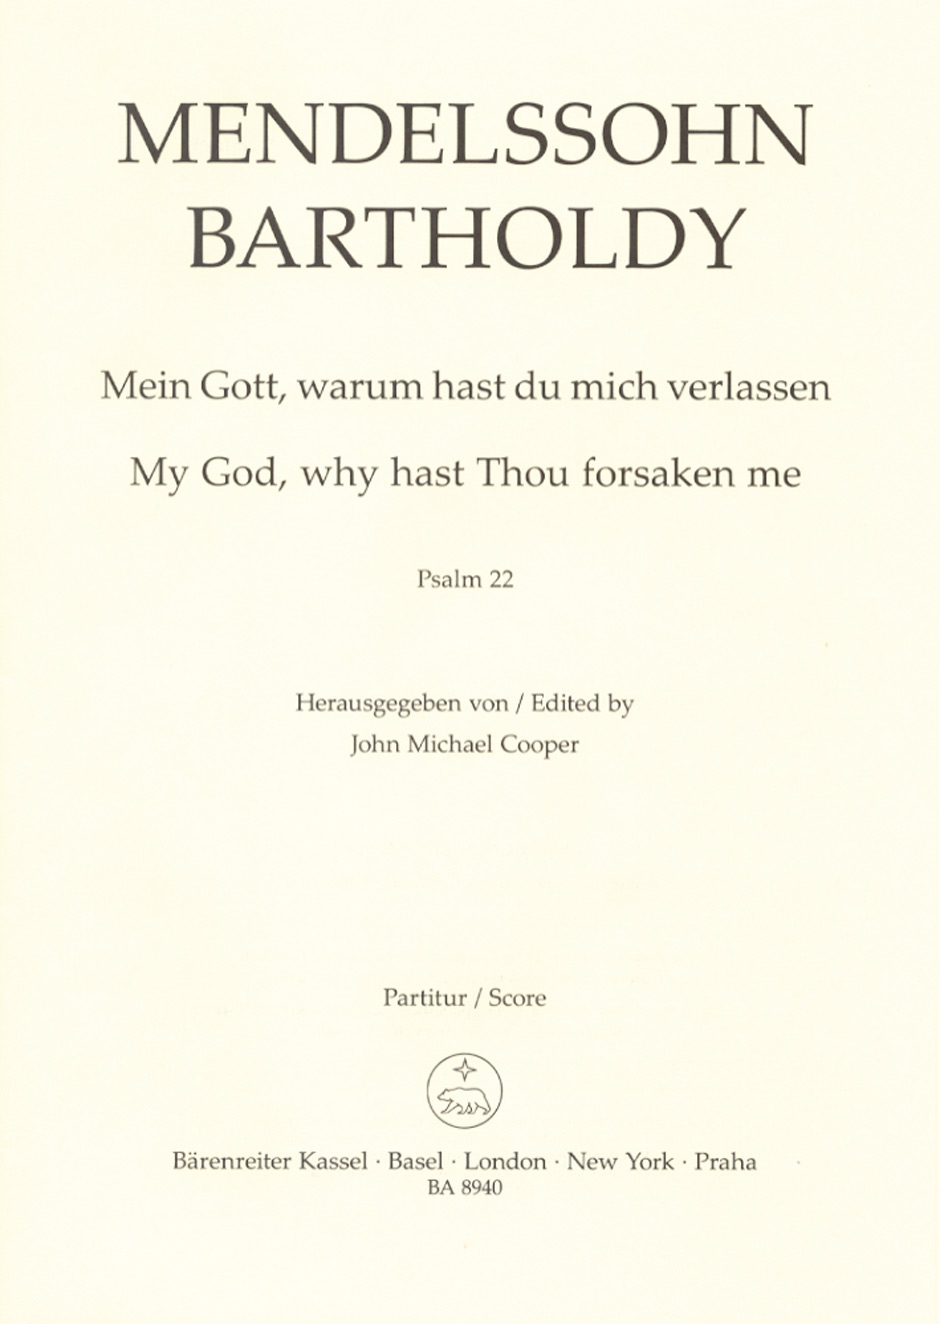 Felix Mendelssohn Bartholdy: Mein Gott  warum hast du mich verlassen (Ps 22):